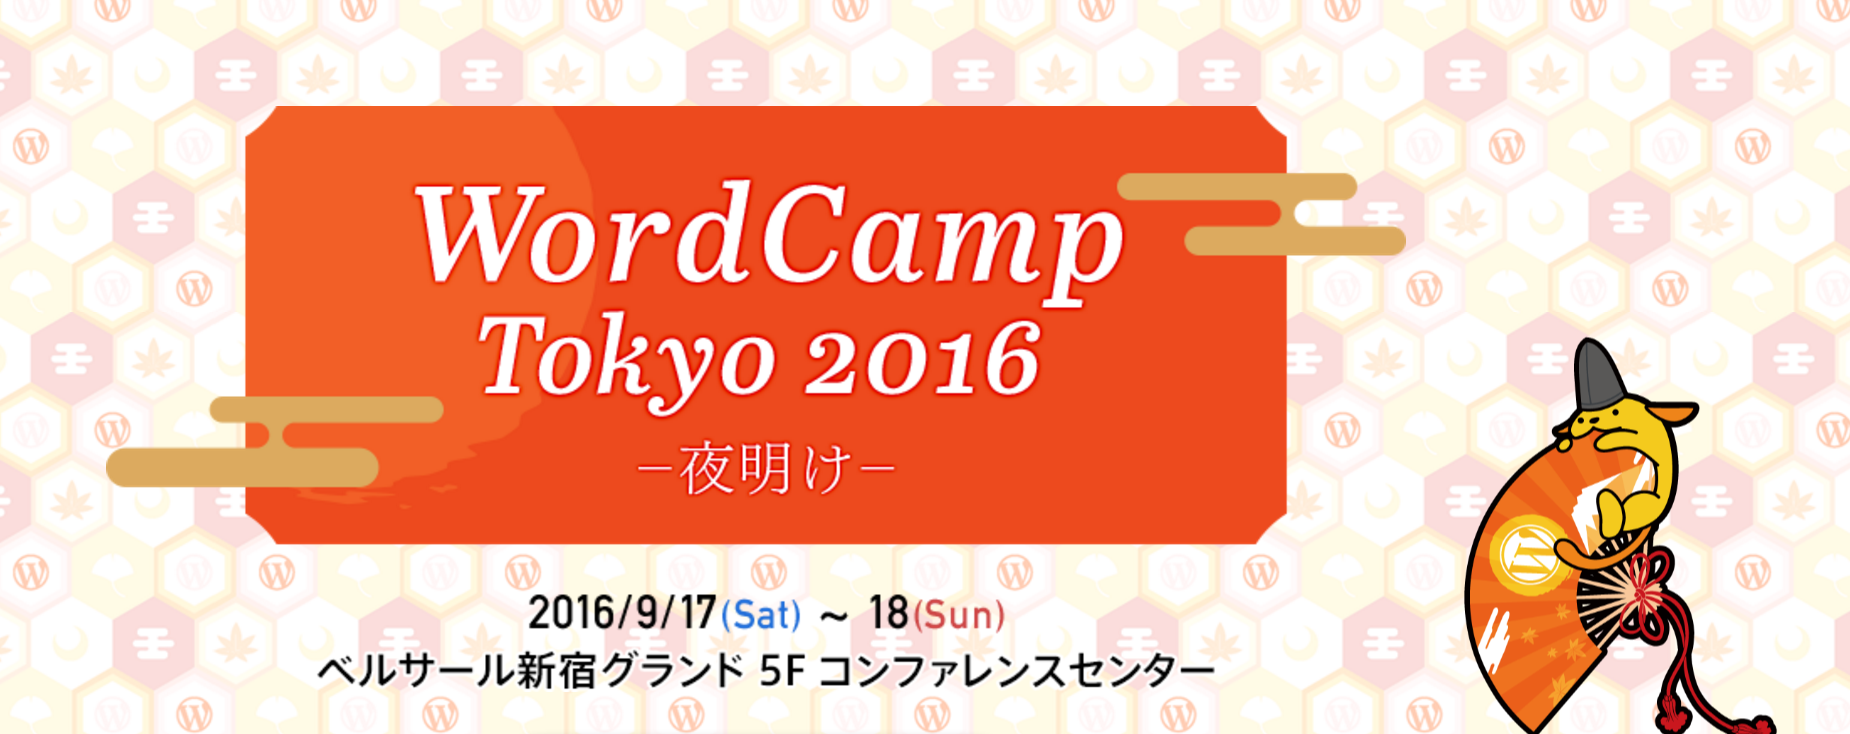 WordCamp Tokyo 2016で初心者にもおすすめなセッションを紹介するよ